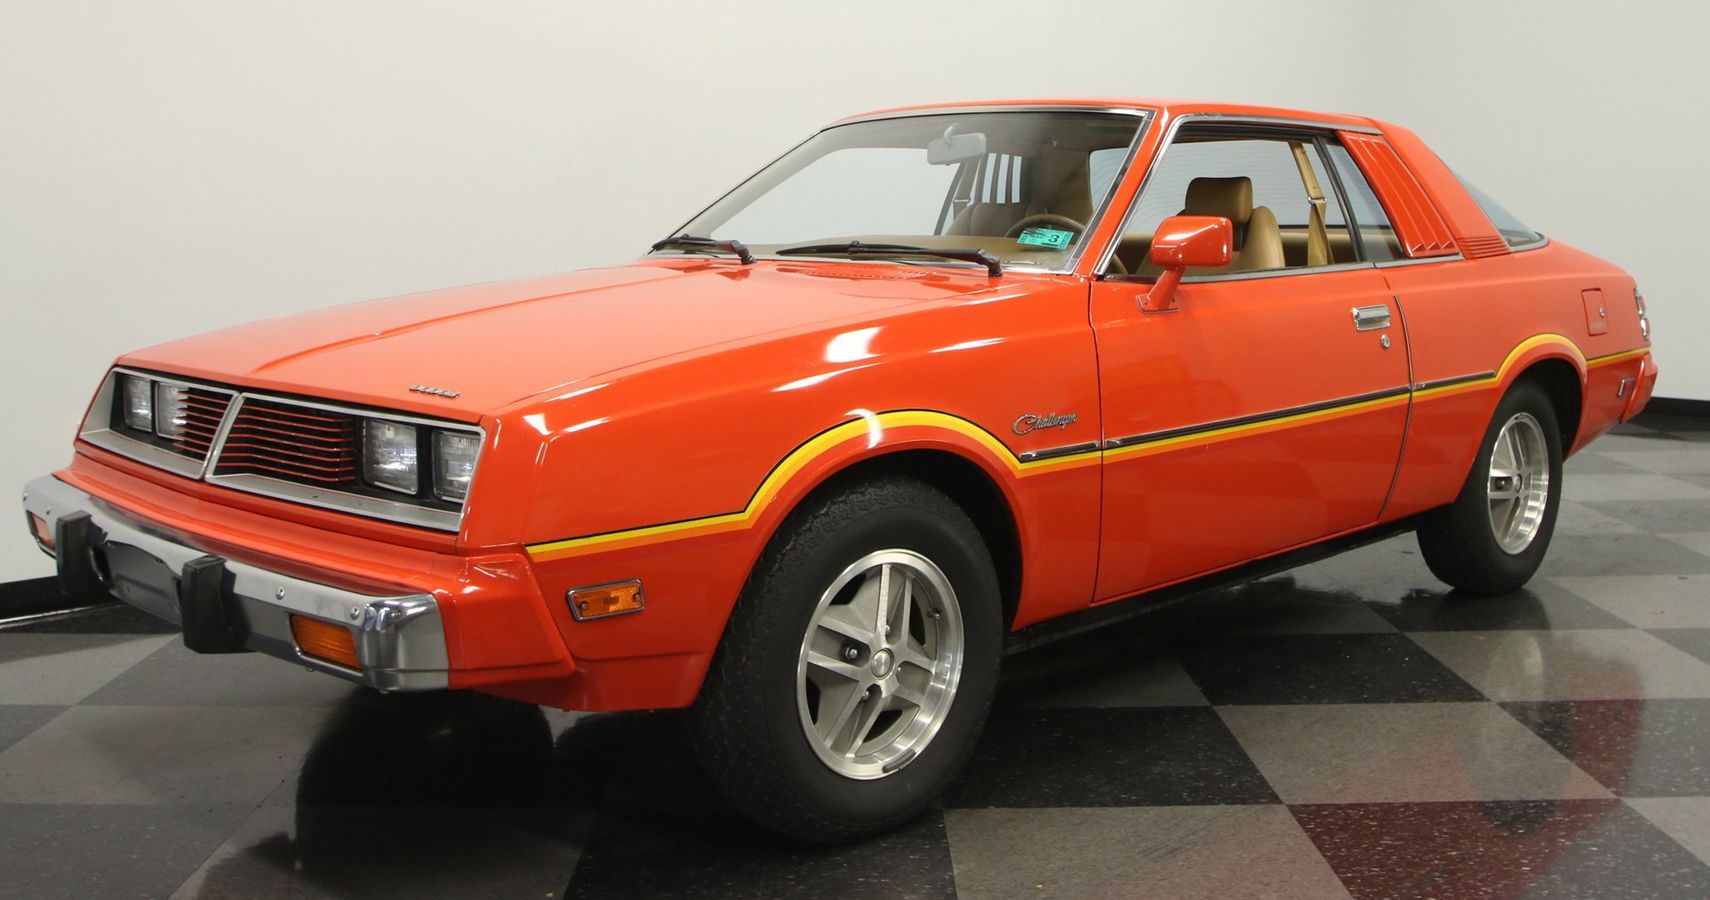 Orange 1978 Dodge Challenger On Display